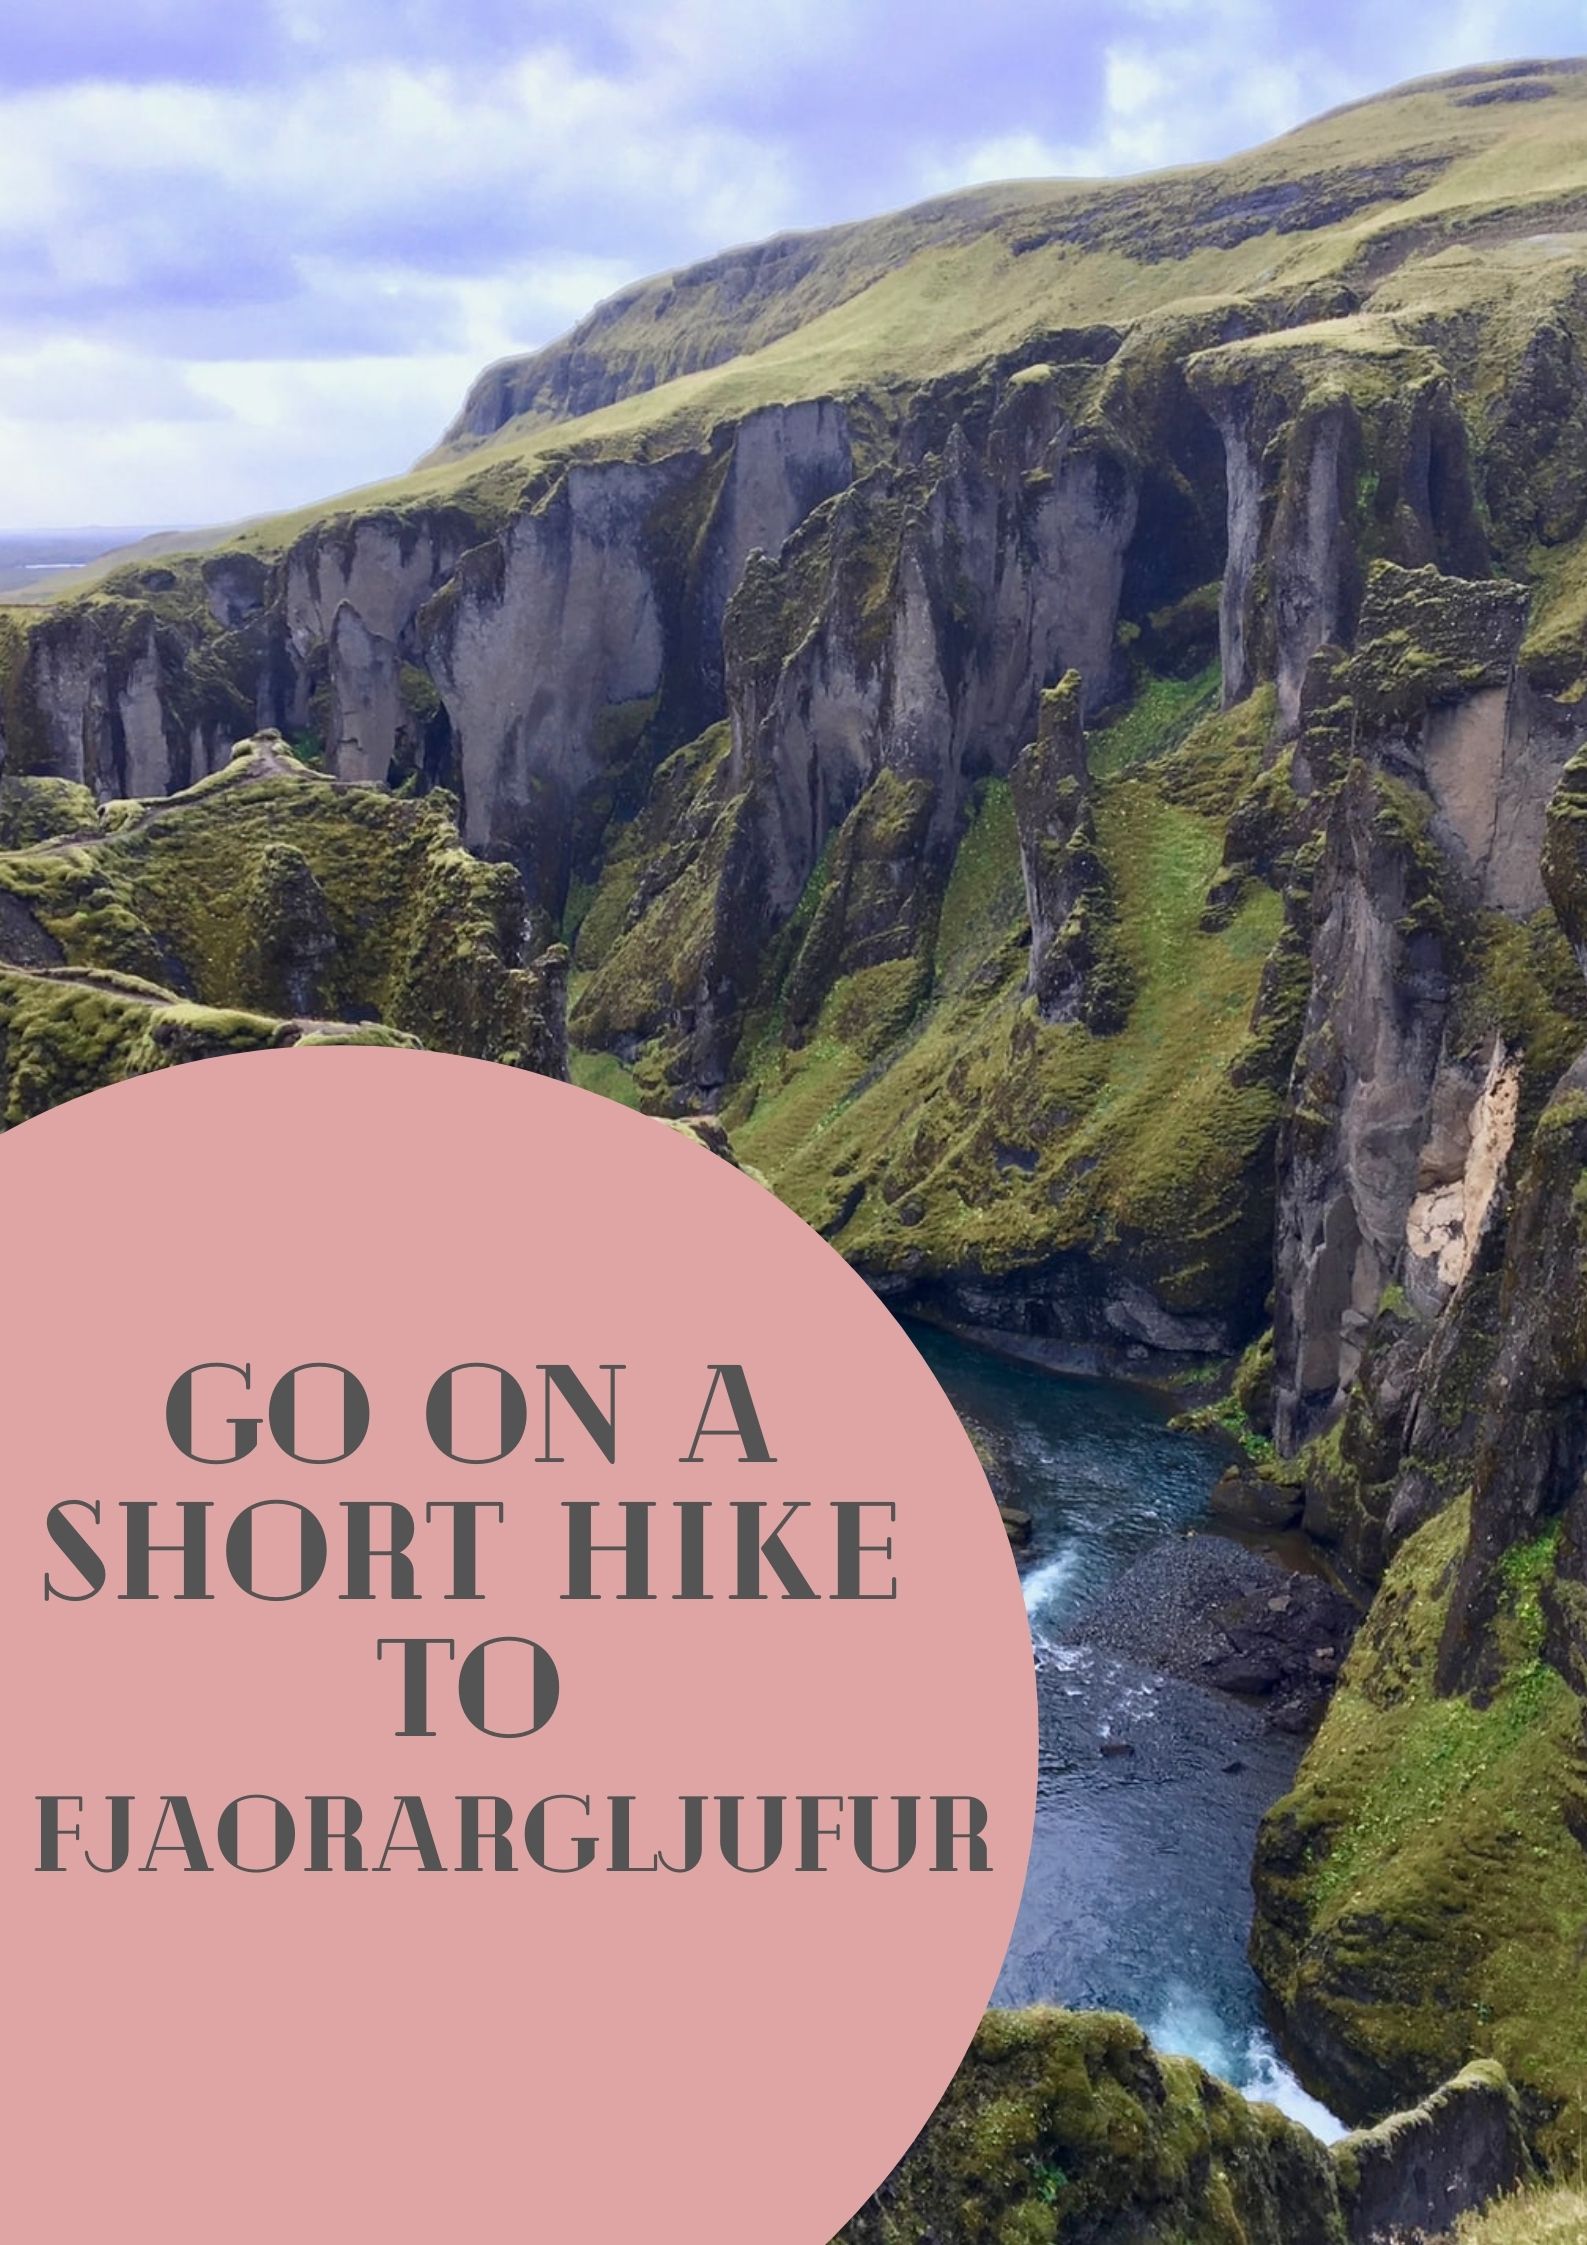 Go on a Short Hike to Fjaorargljufur